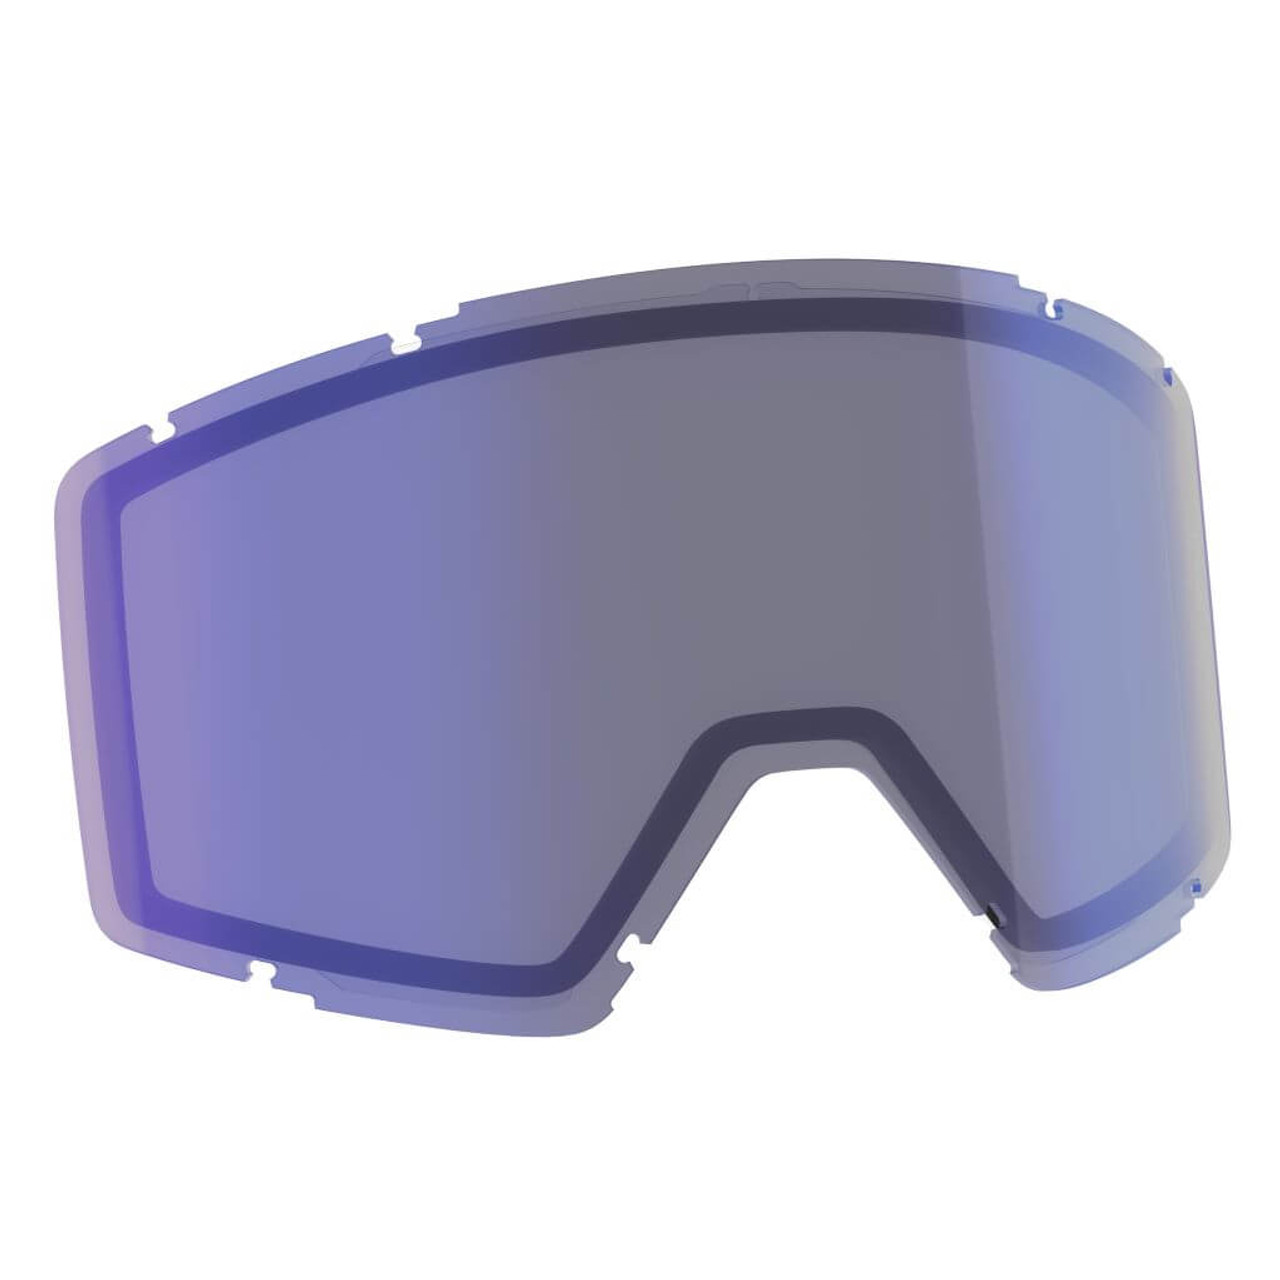 Illuminator Blue Chrome - Scott Shield Replacement Lenses